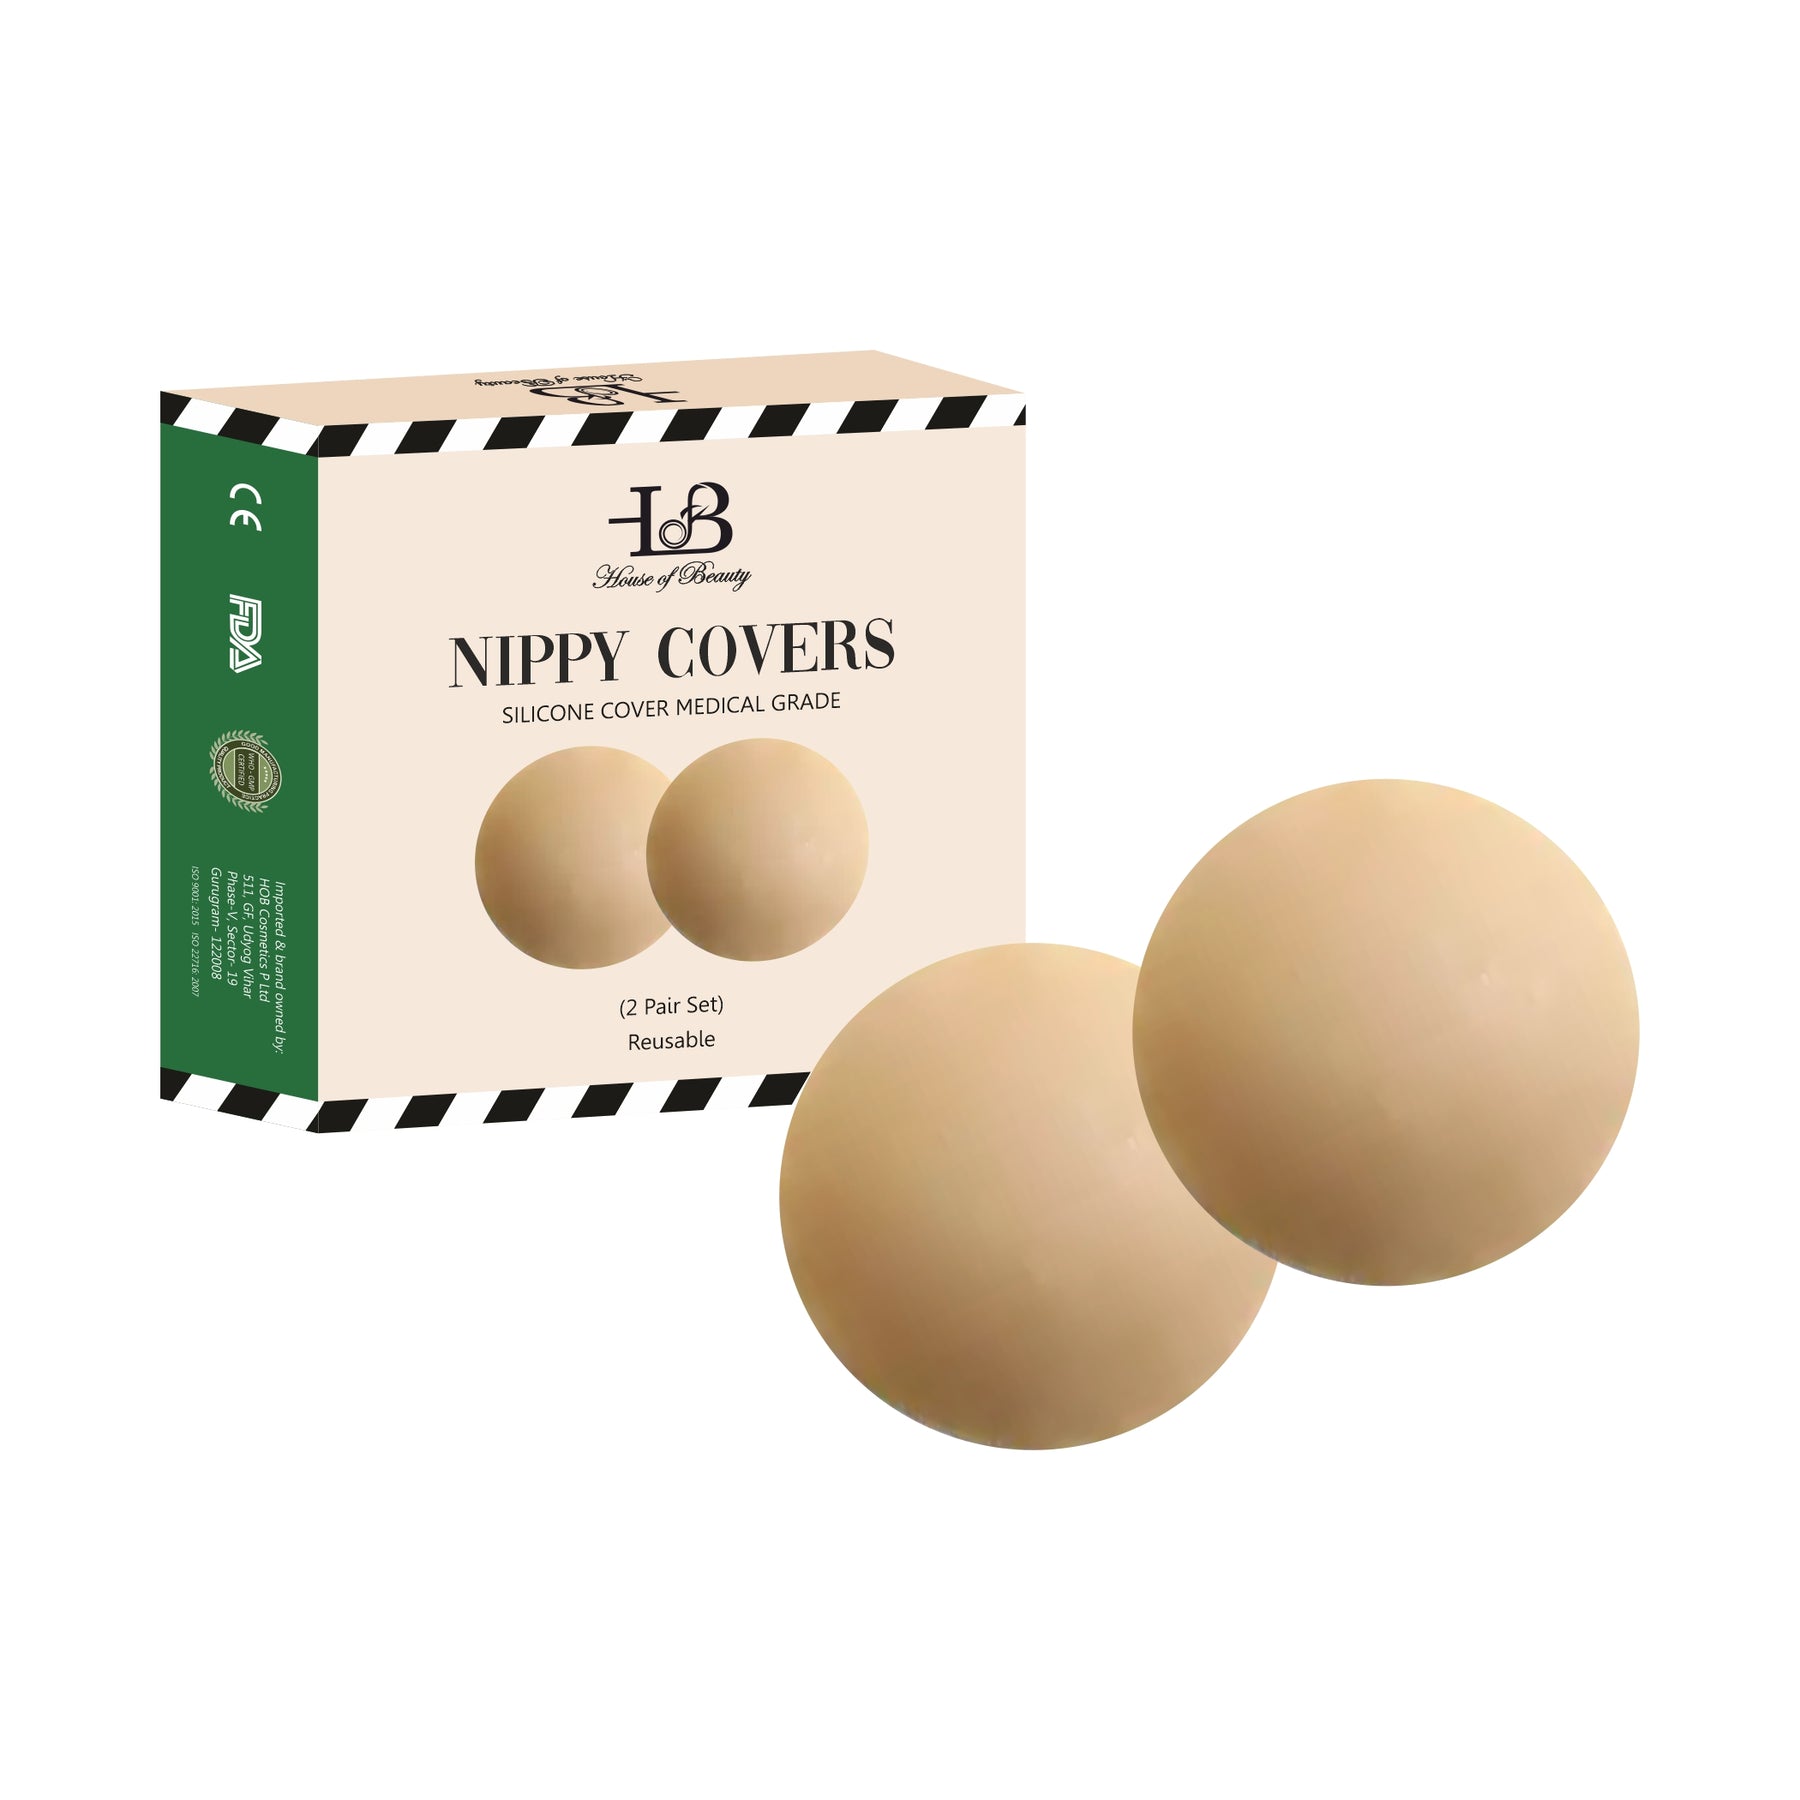 Nippy Covers (Silicone Cover Medical Grade Bra)